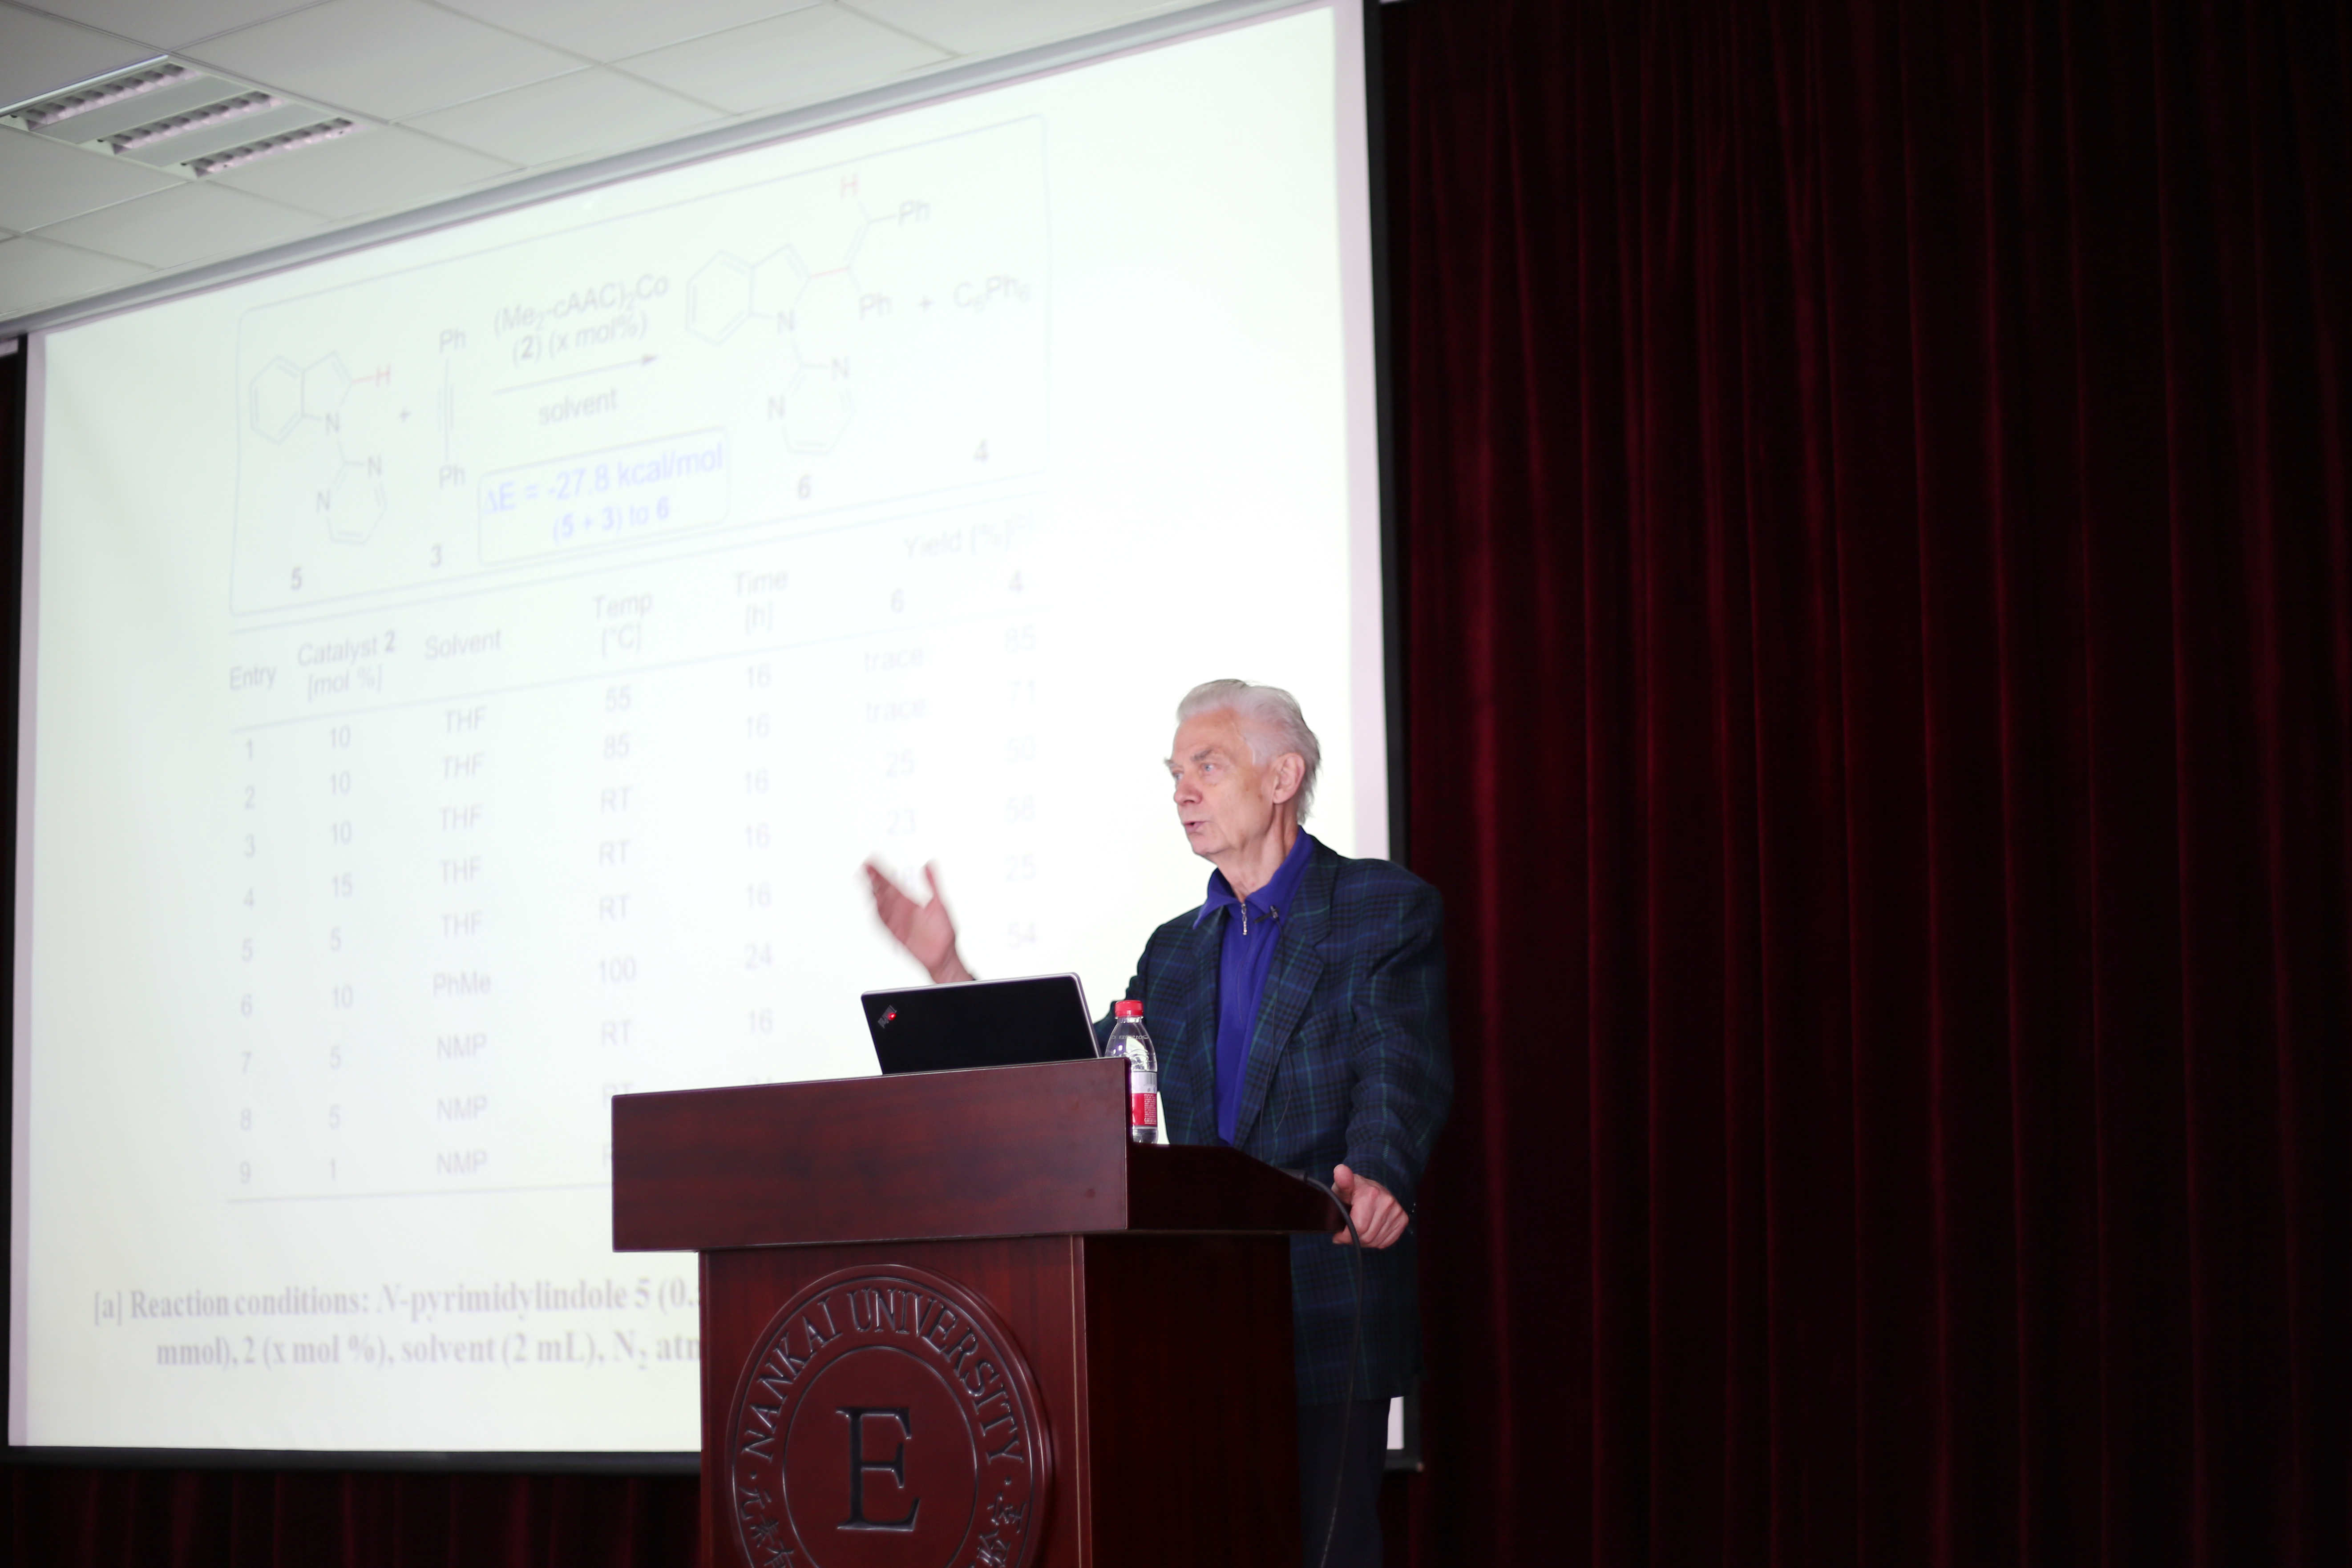 Dr. h.c. mult. Herbert W. Roesky教授访问元素有机化学国家重点实验室并做学术报告